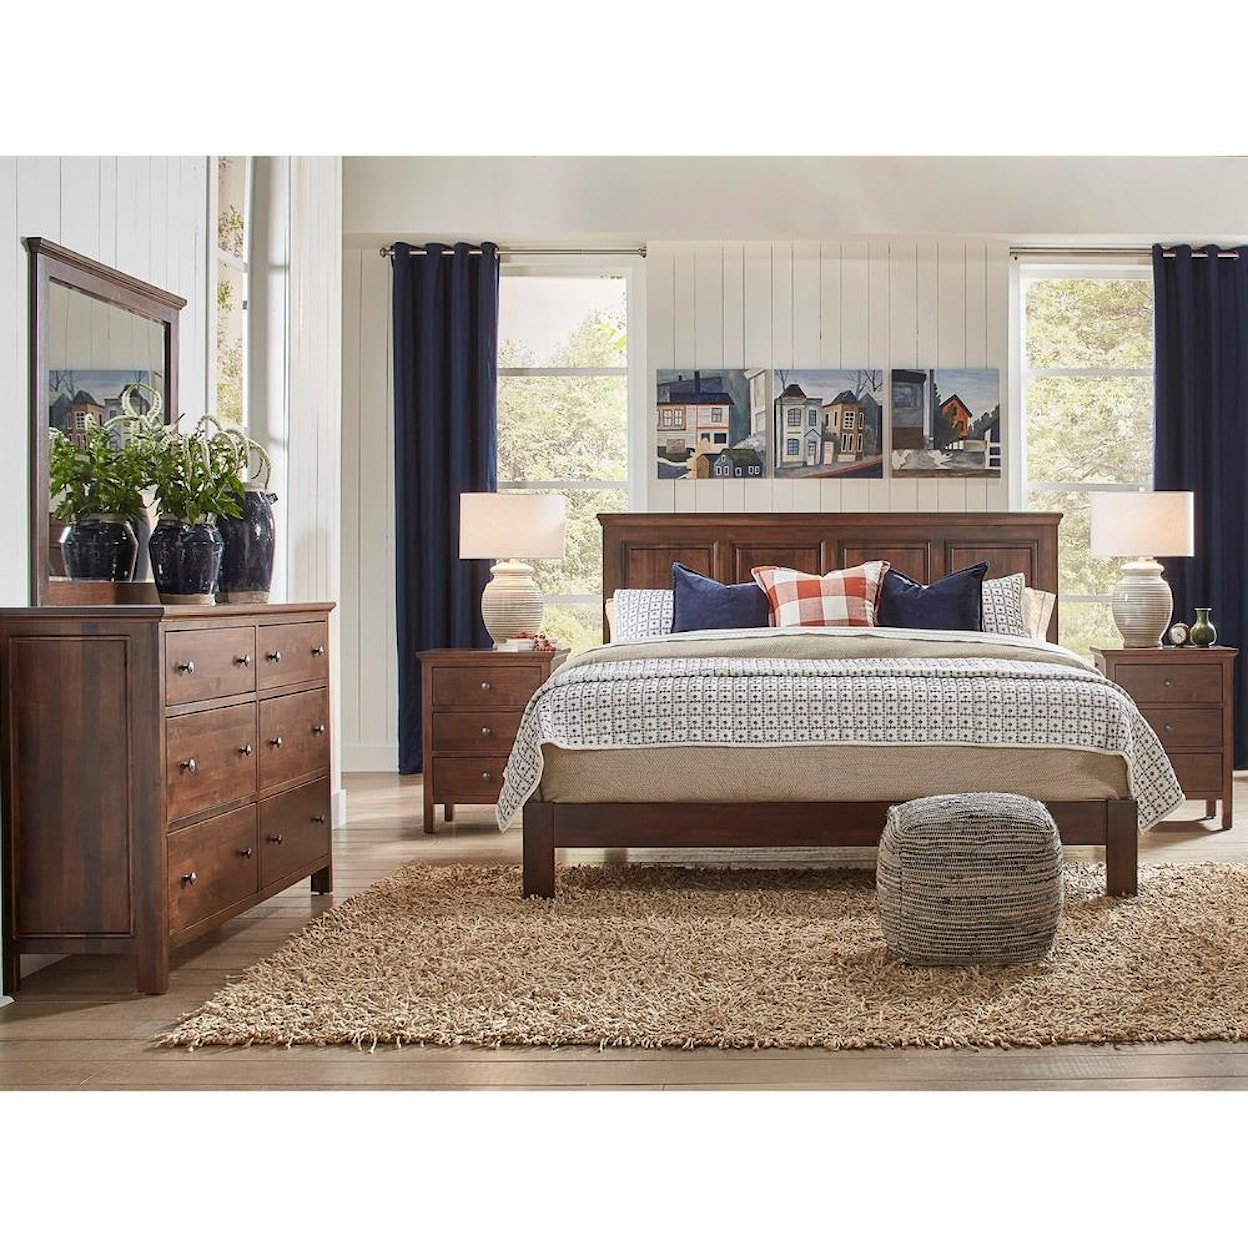 Archbold Furniture Heritage King Raised Panel Bed